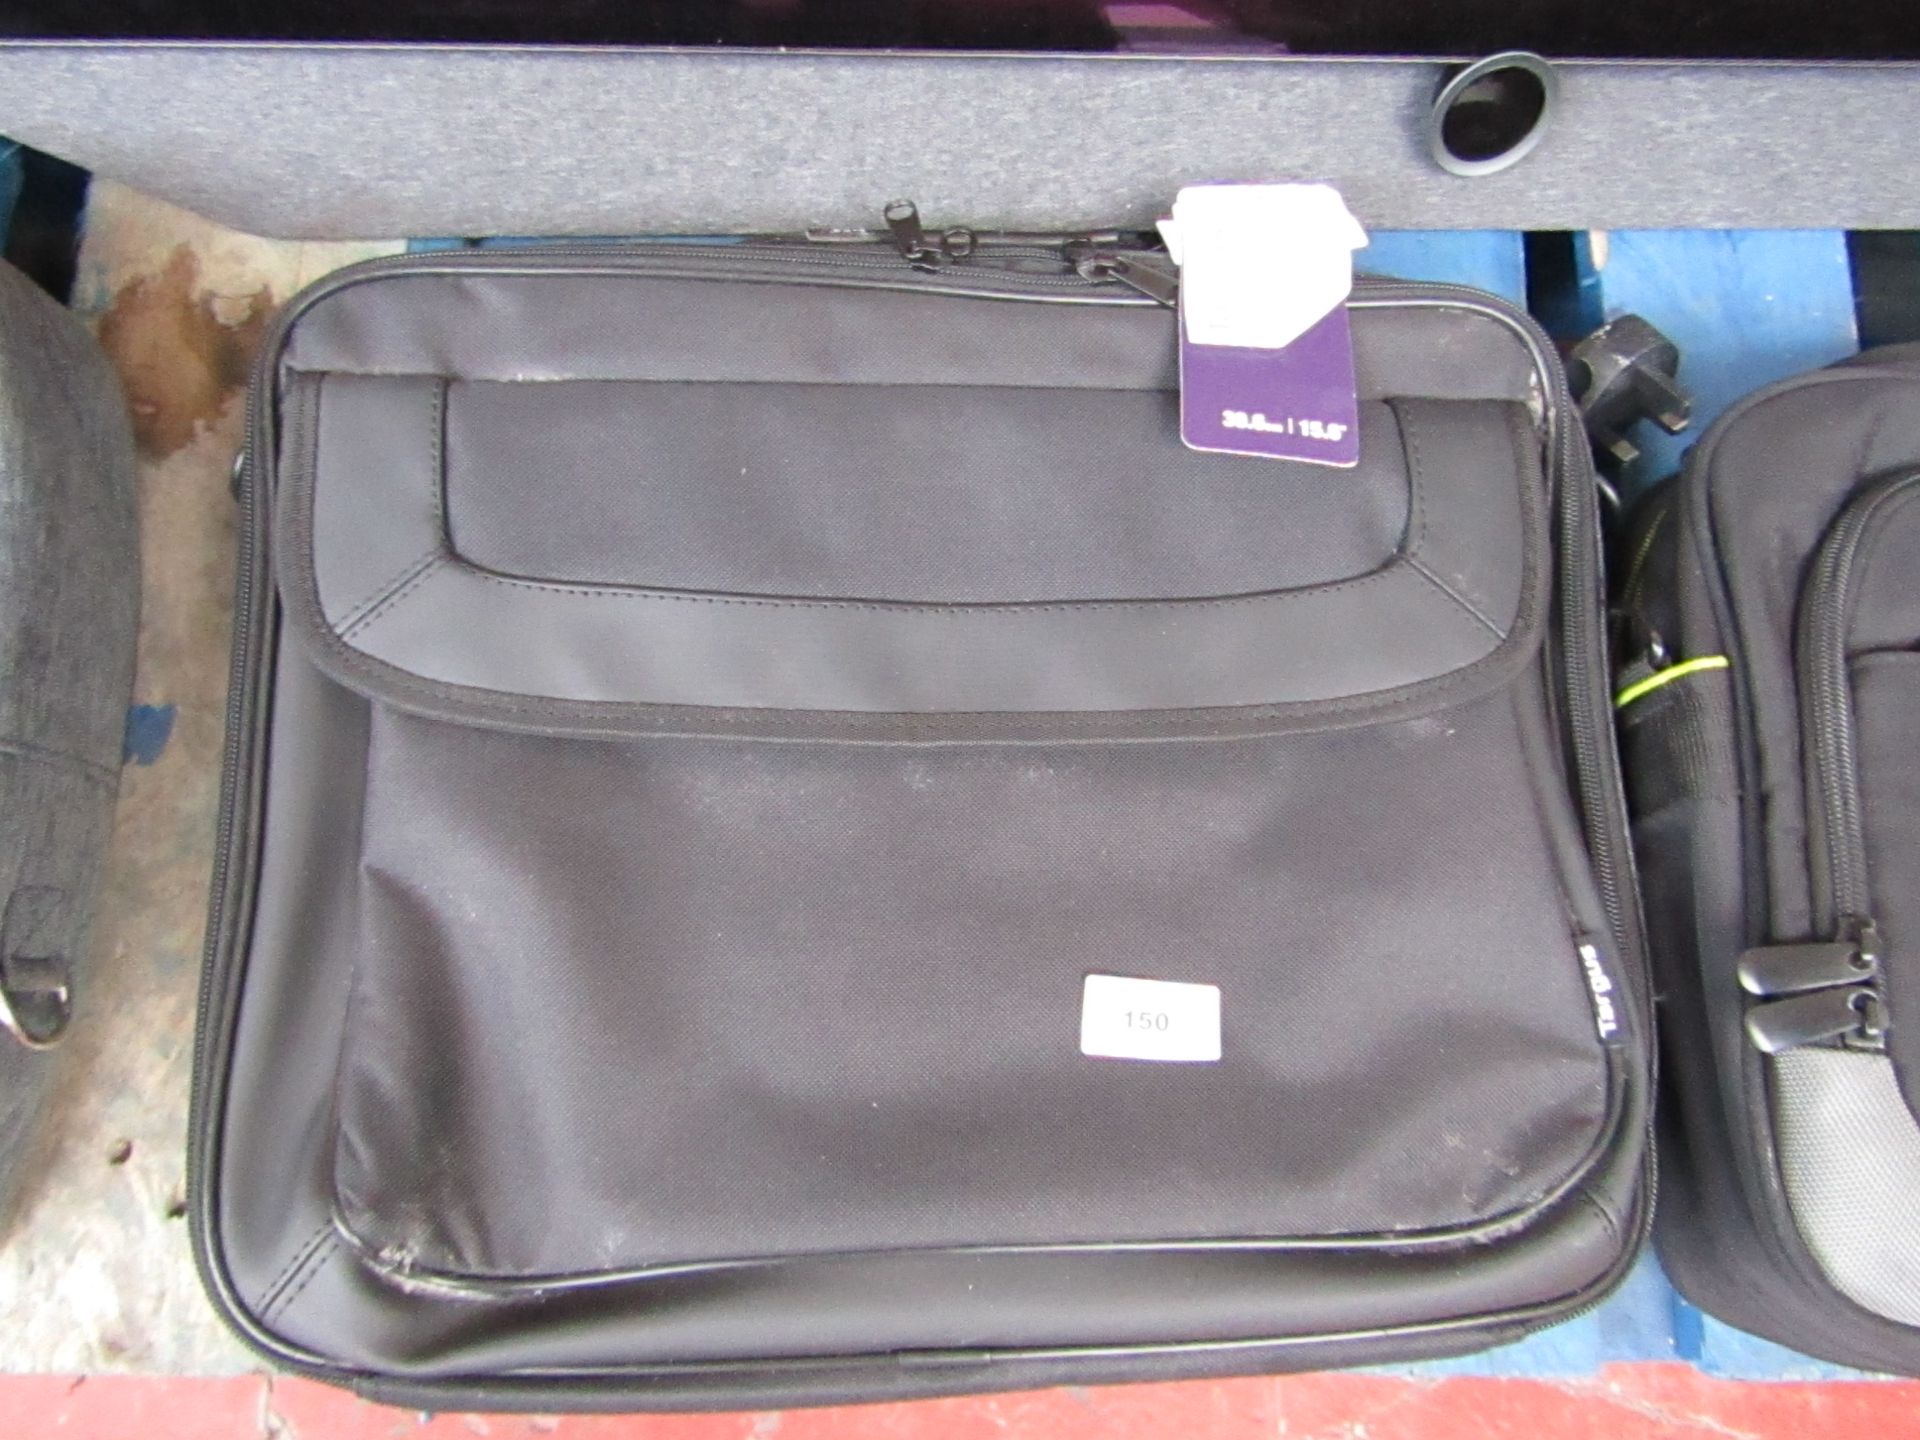 Targus - Laptop bag - See image for design.